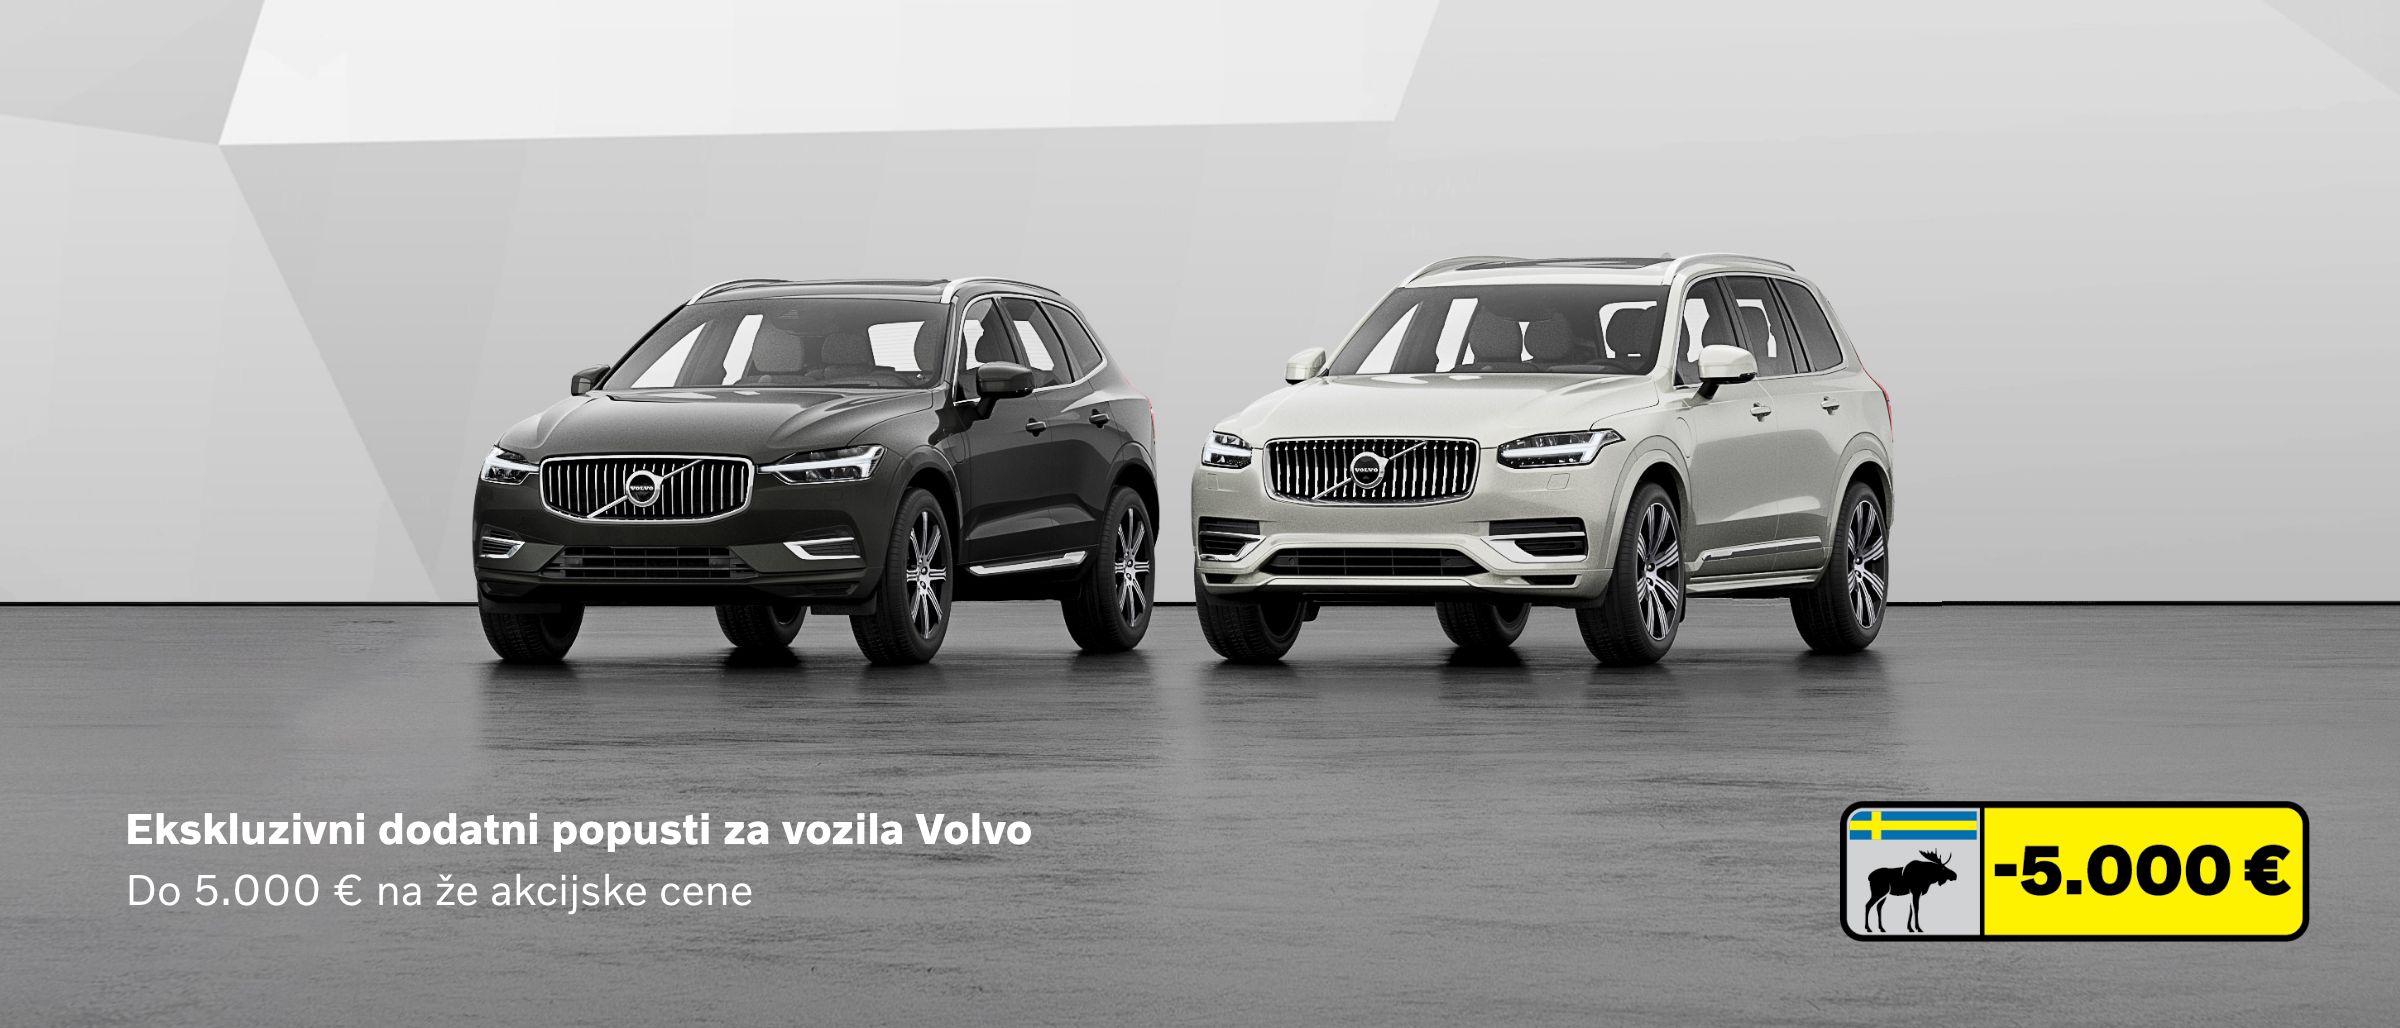 Ekskluzivni dodatni popusti Volvo do 5000€